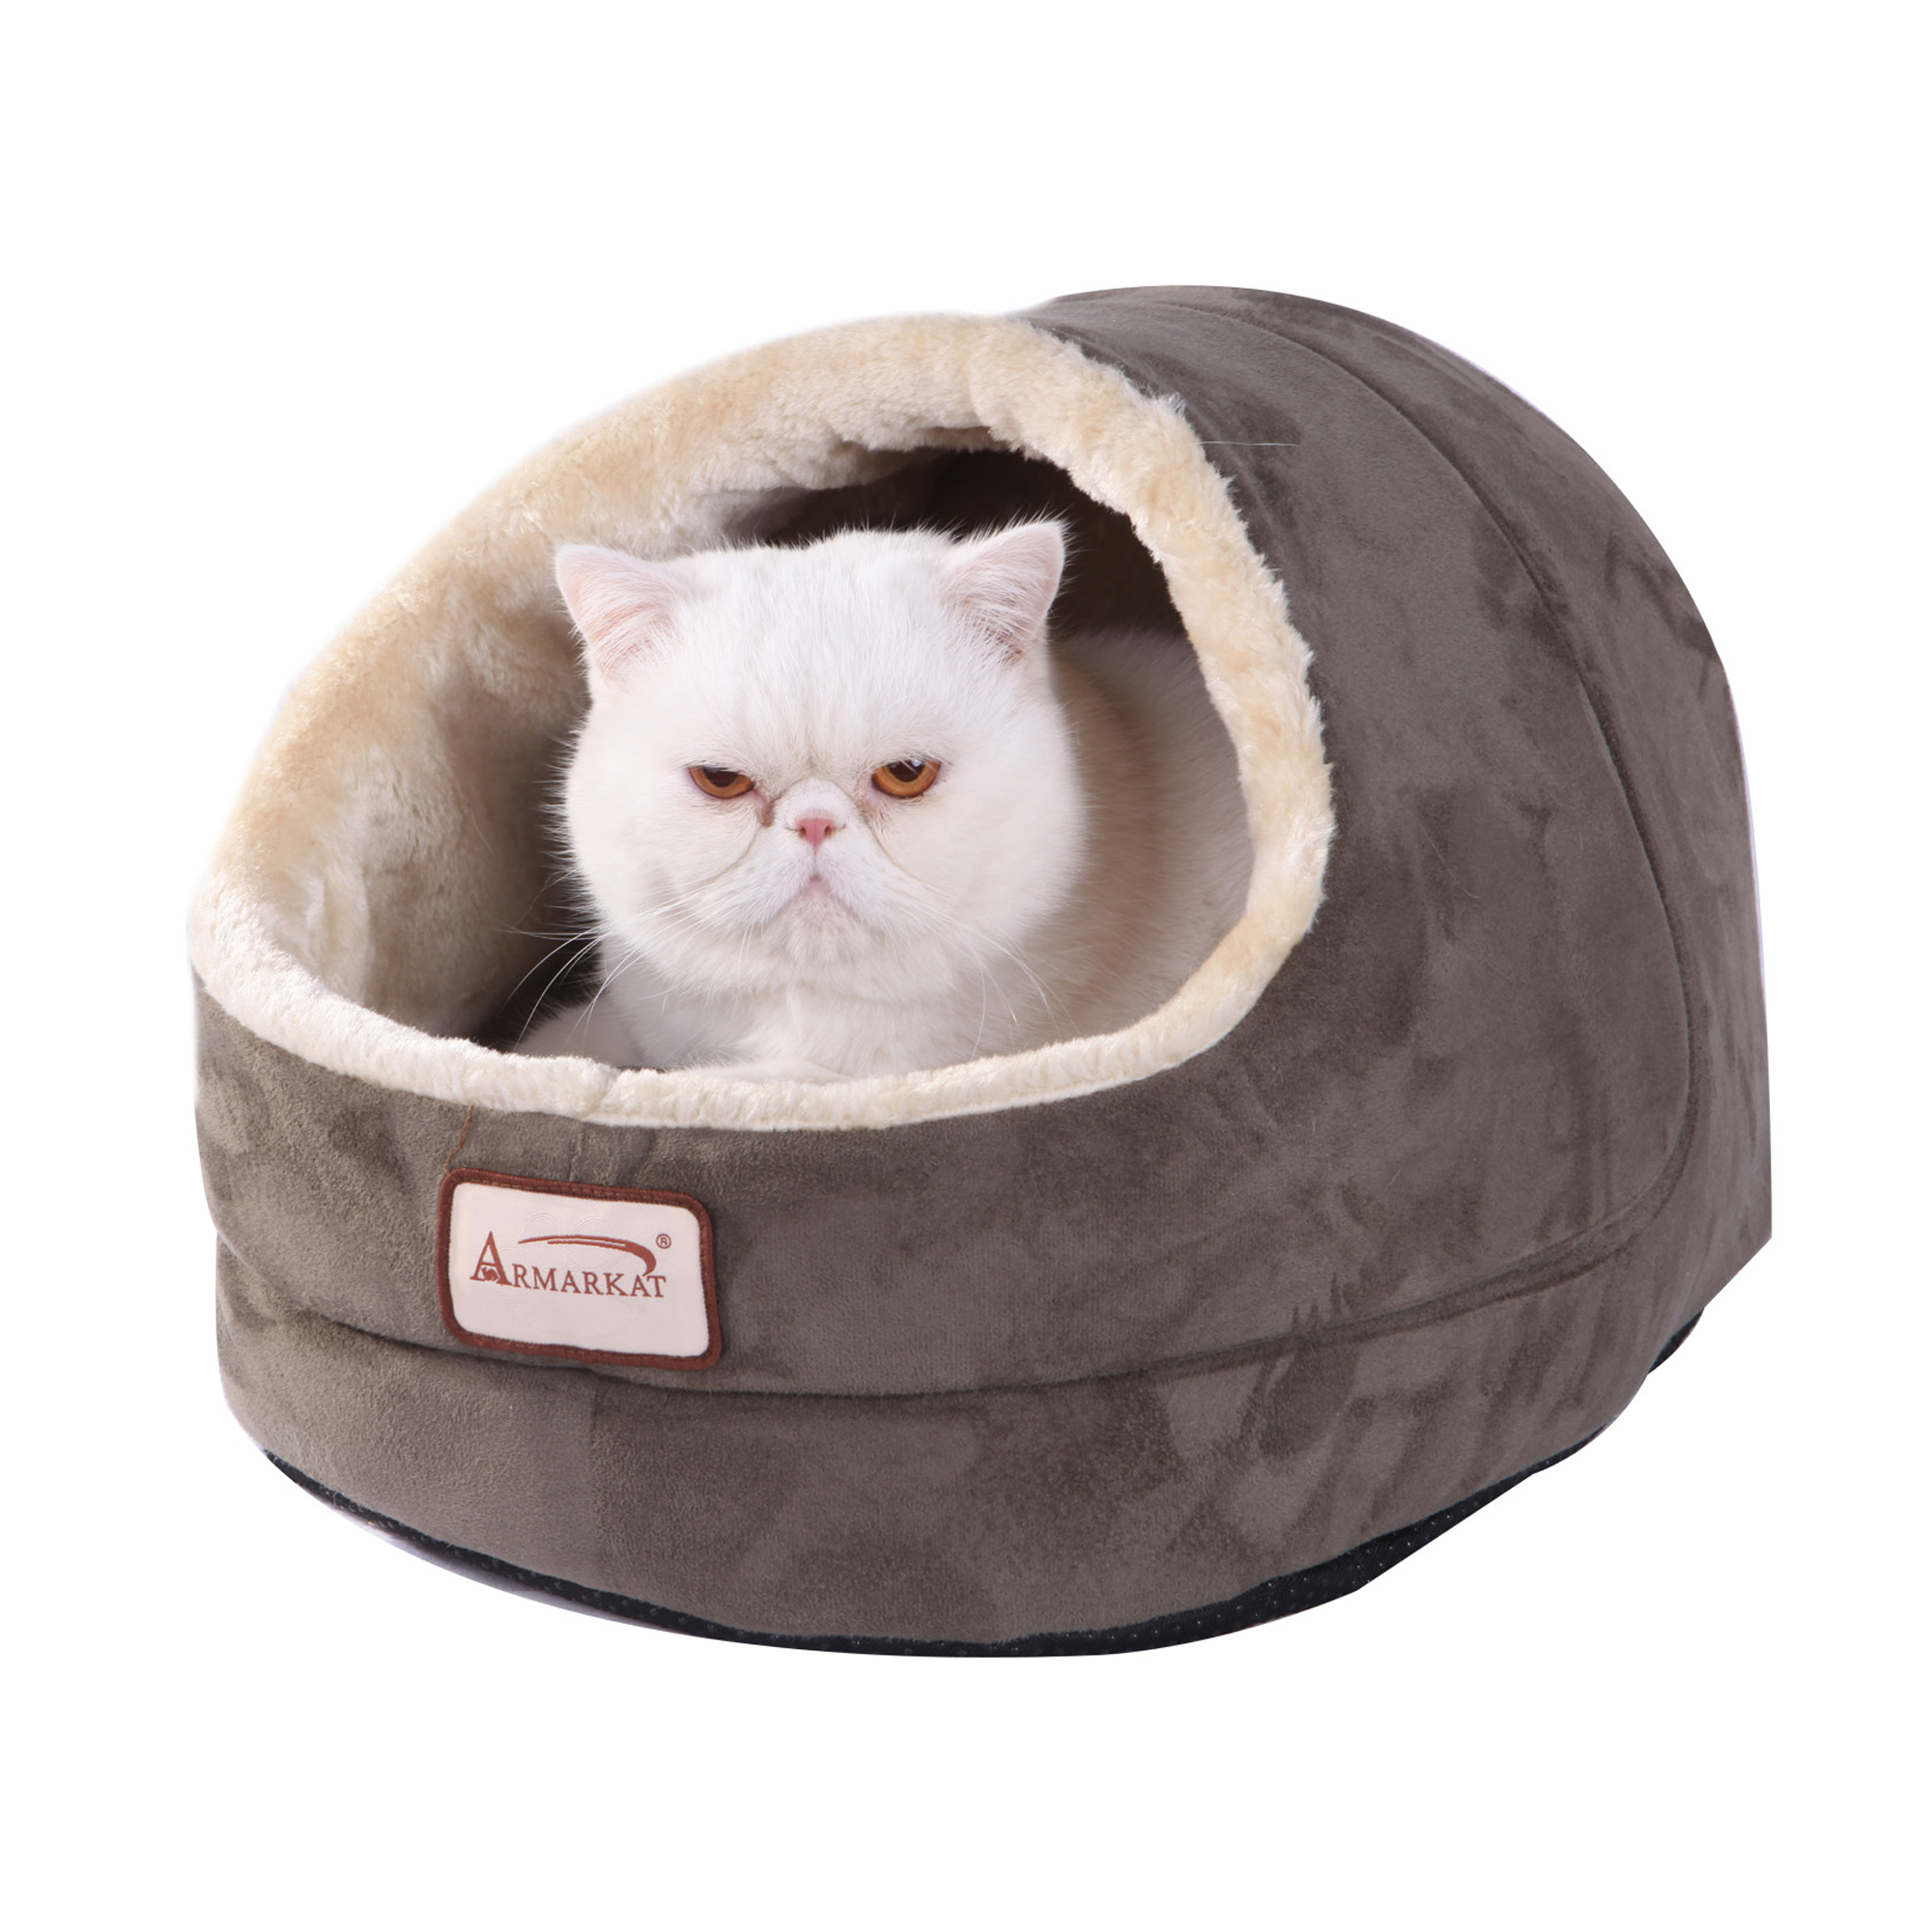 C18hml-mh Armarkat Pet Bed Cat Bed 18 X 12 X 14 - Laurel Green & Beige